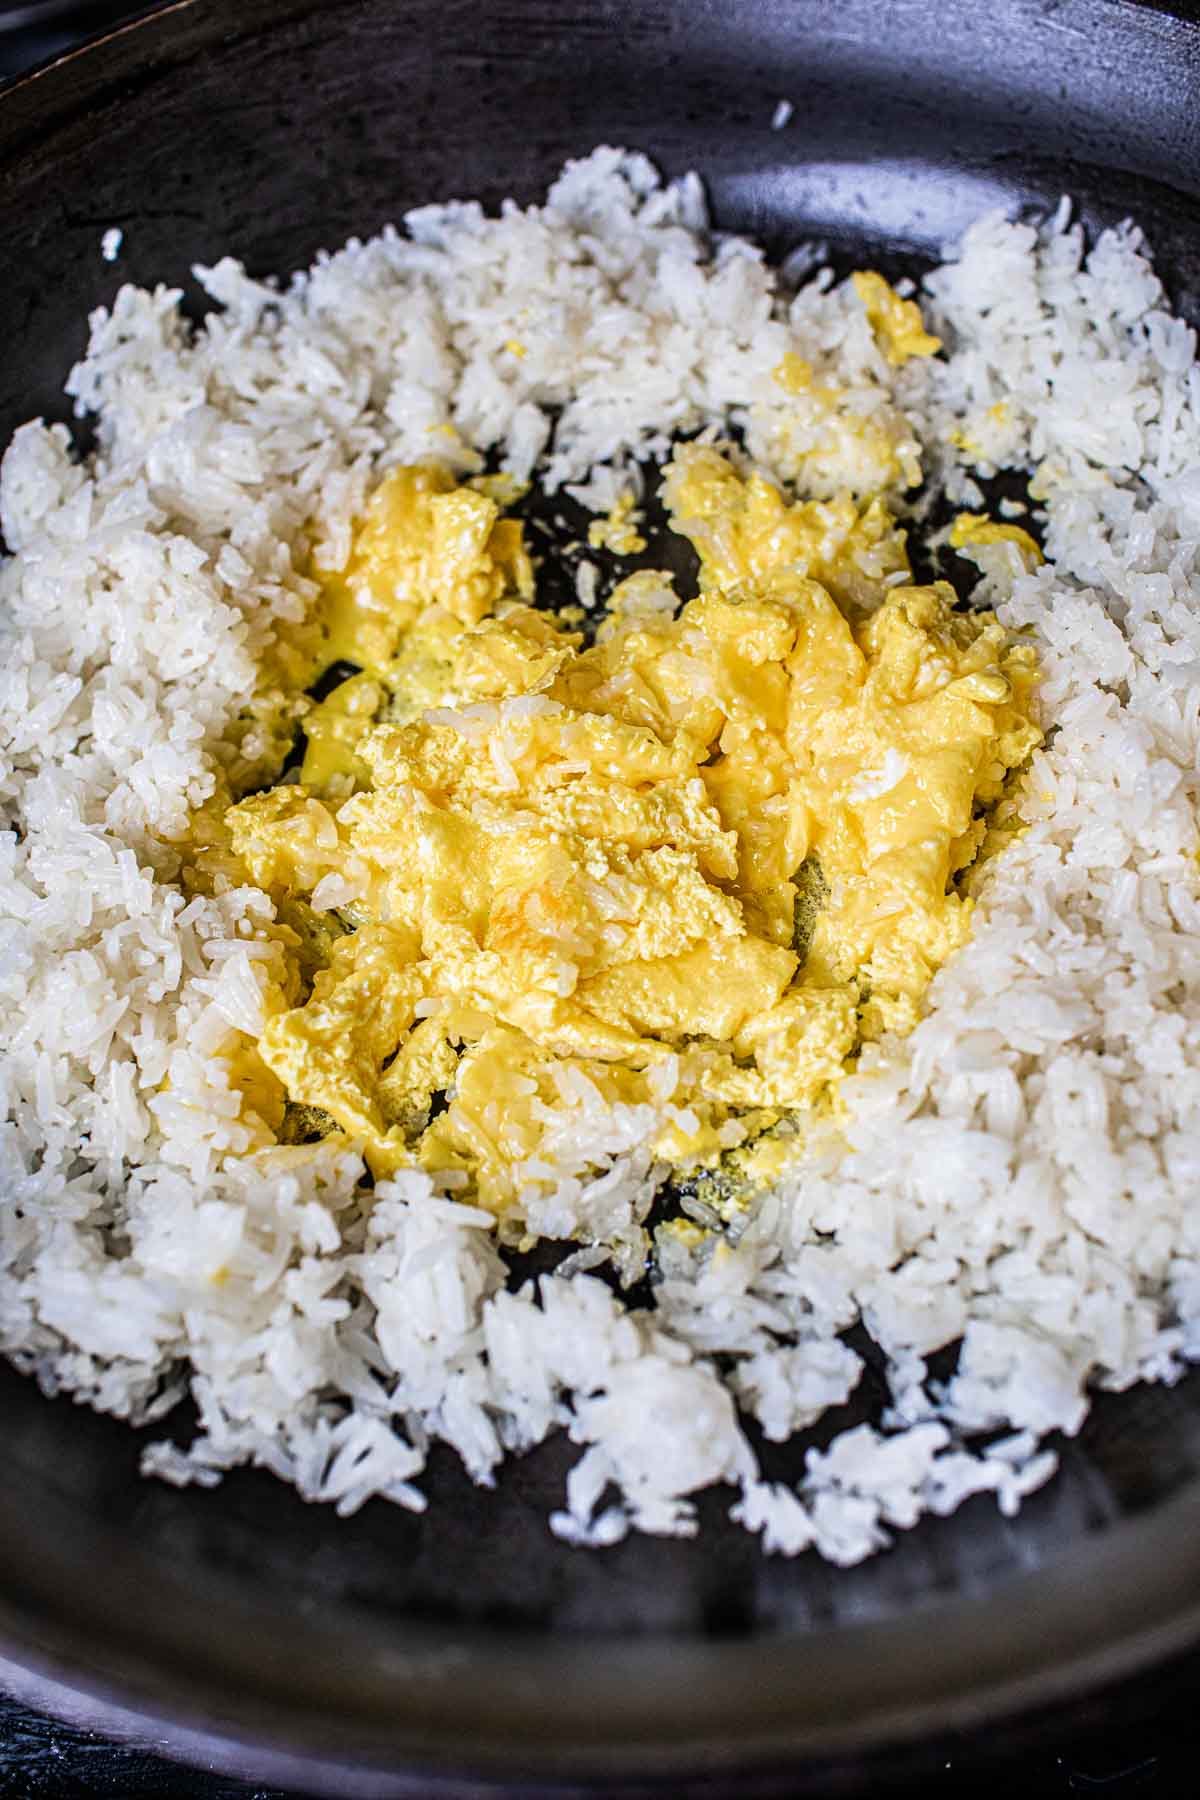 scrambled eggs in crater of jasmine rice